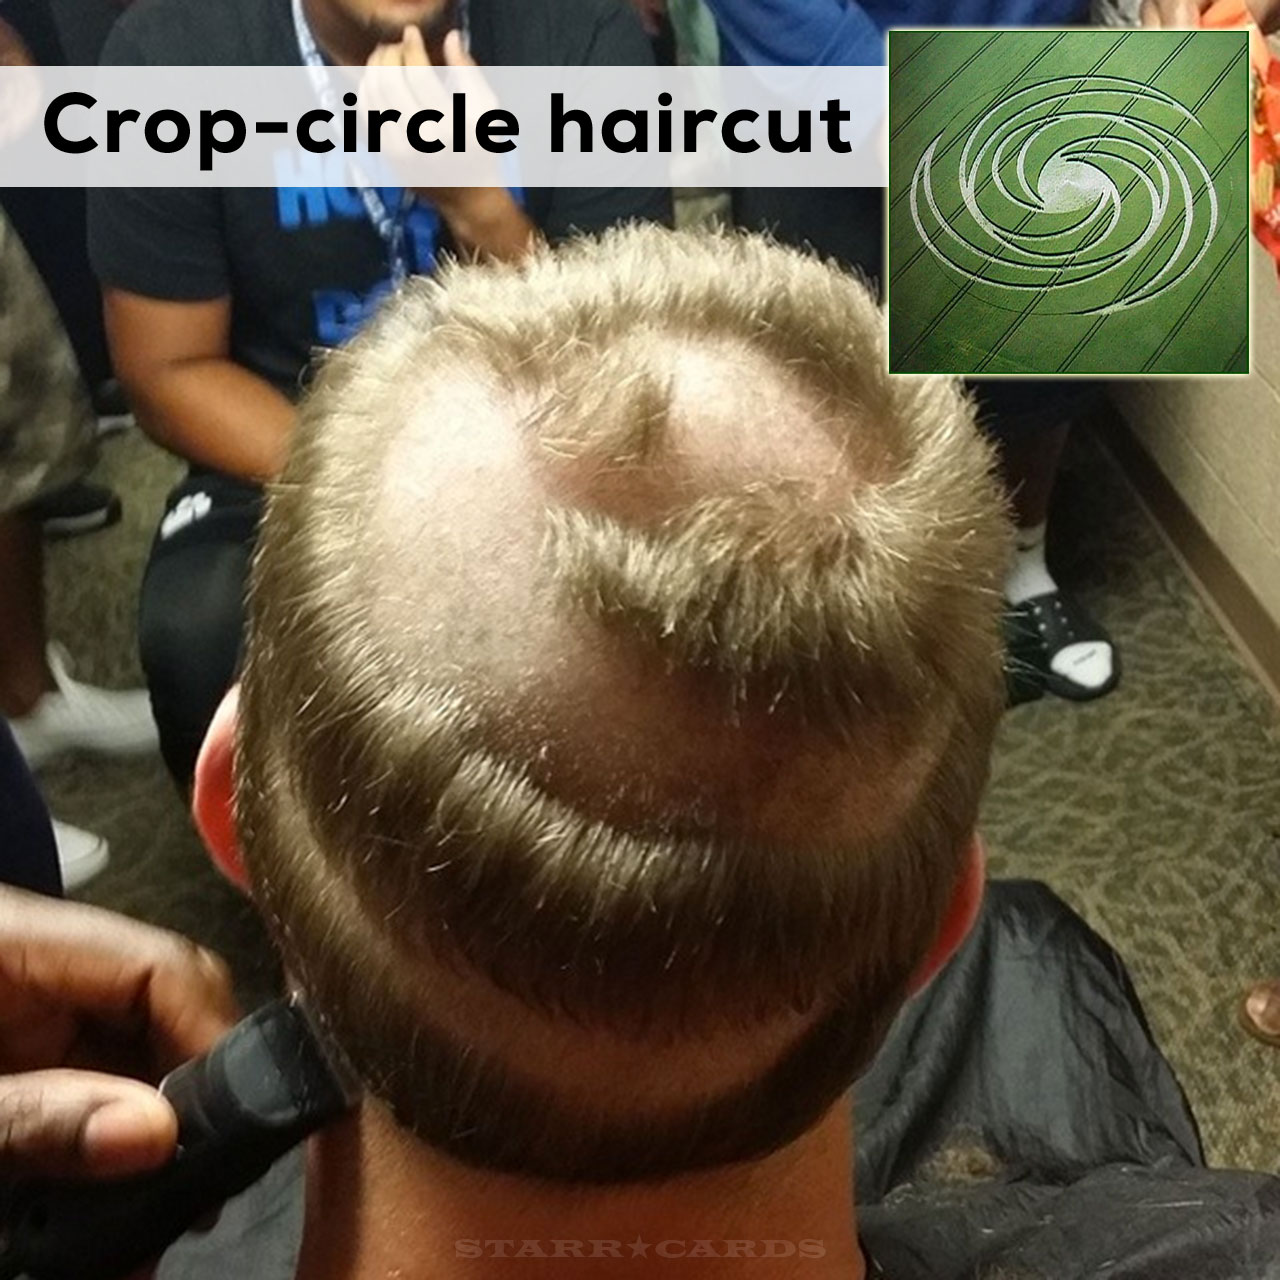 Rookie's crop-circle haircut courtesy of Colts' Art Jones